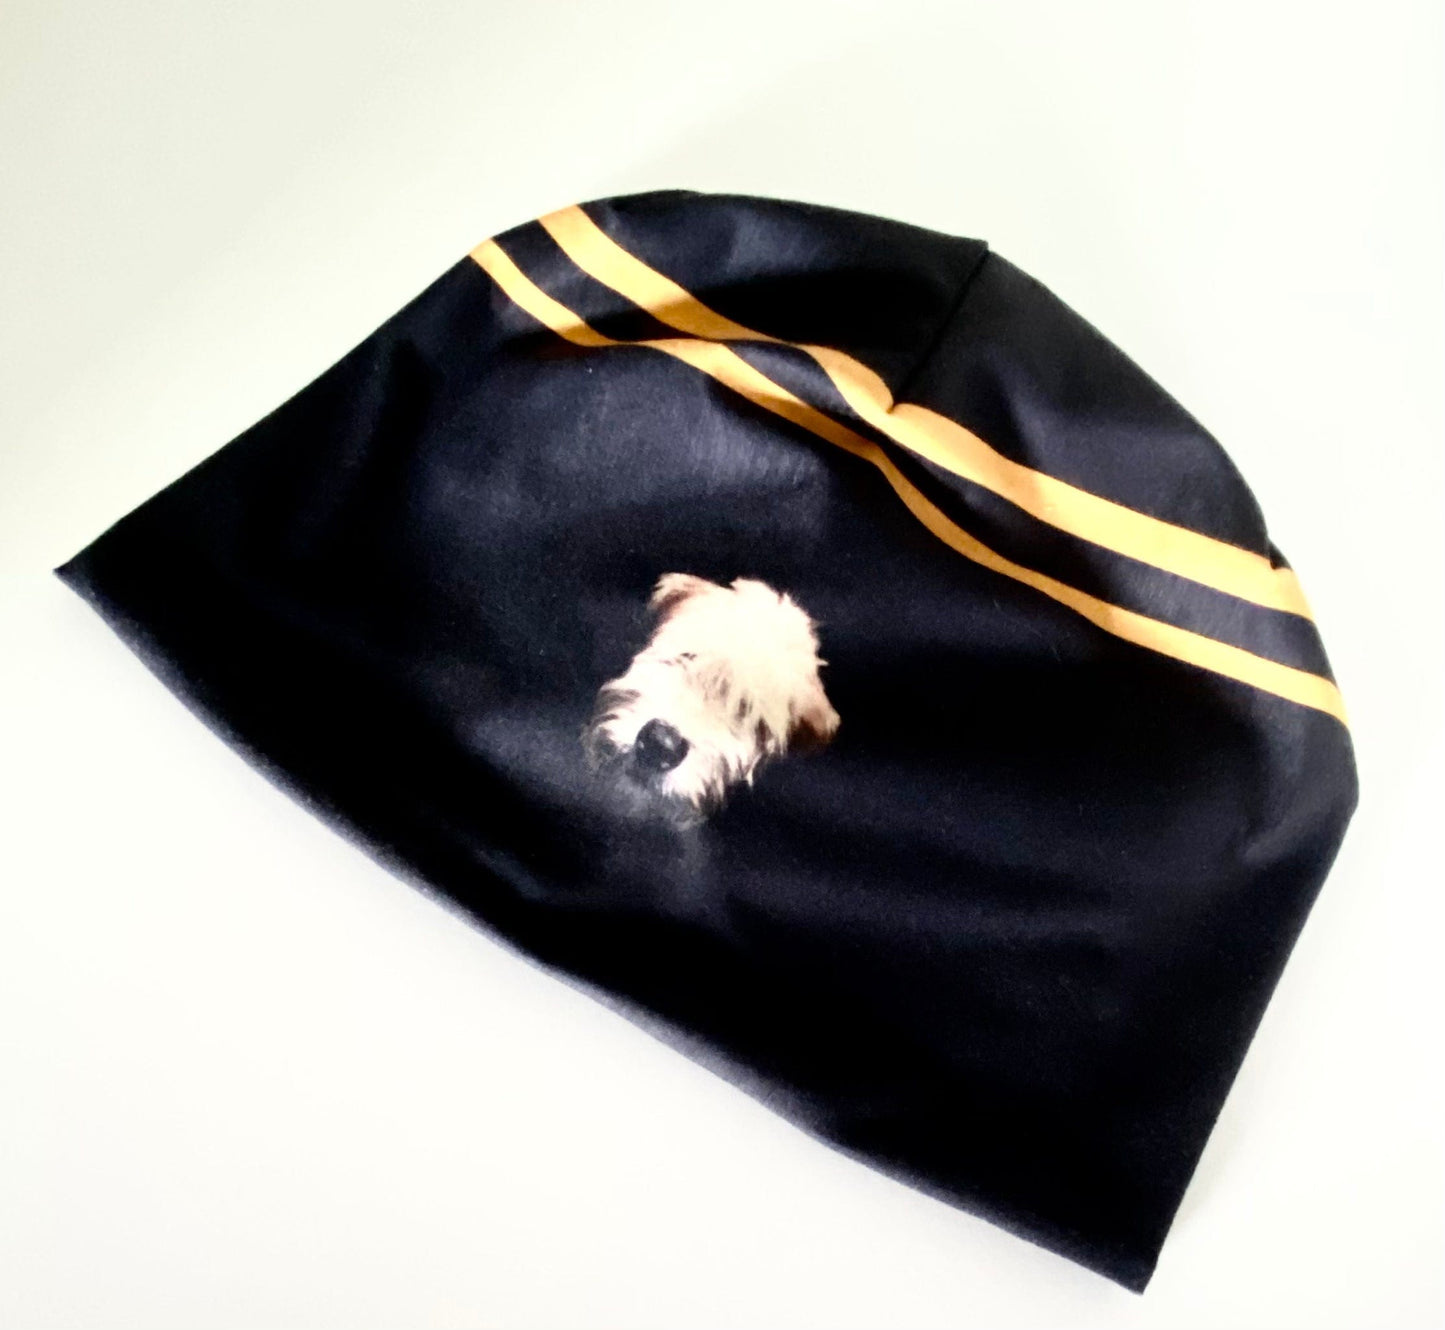 Black & Gold Wheaten Puppy hat 🇨🇦 - the Wheaten Store -